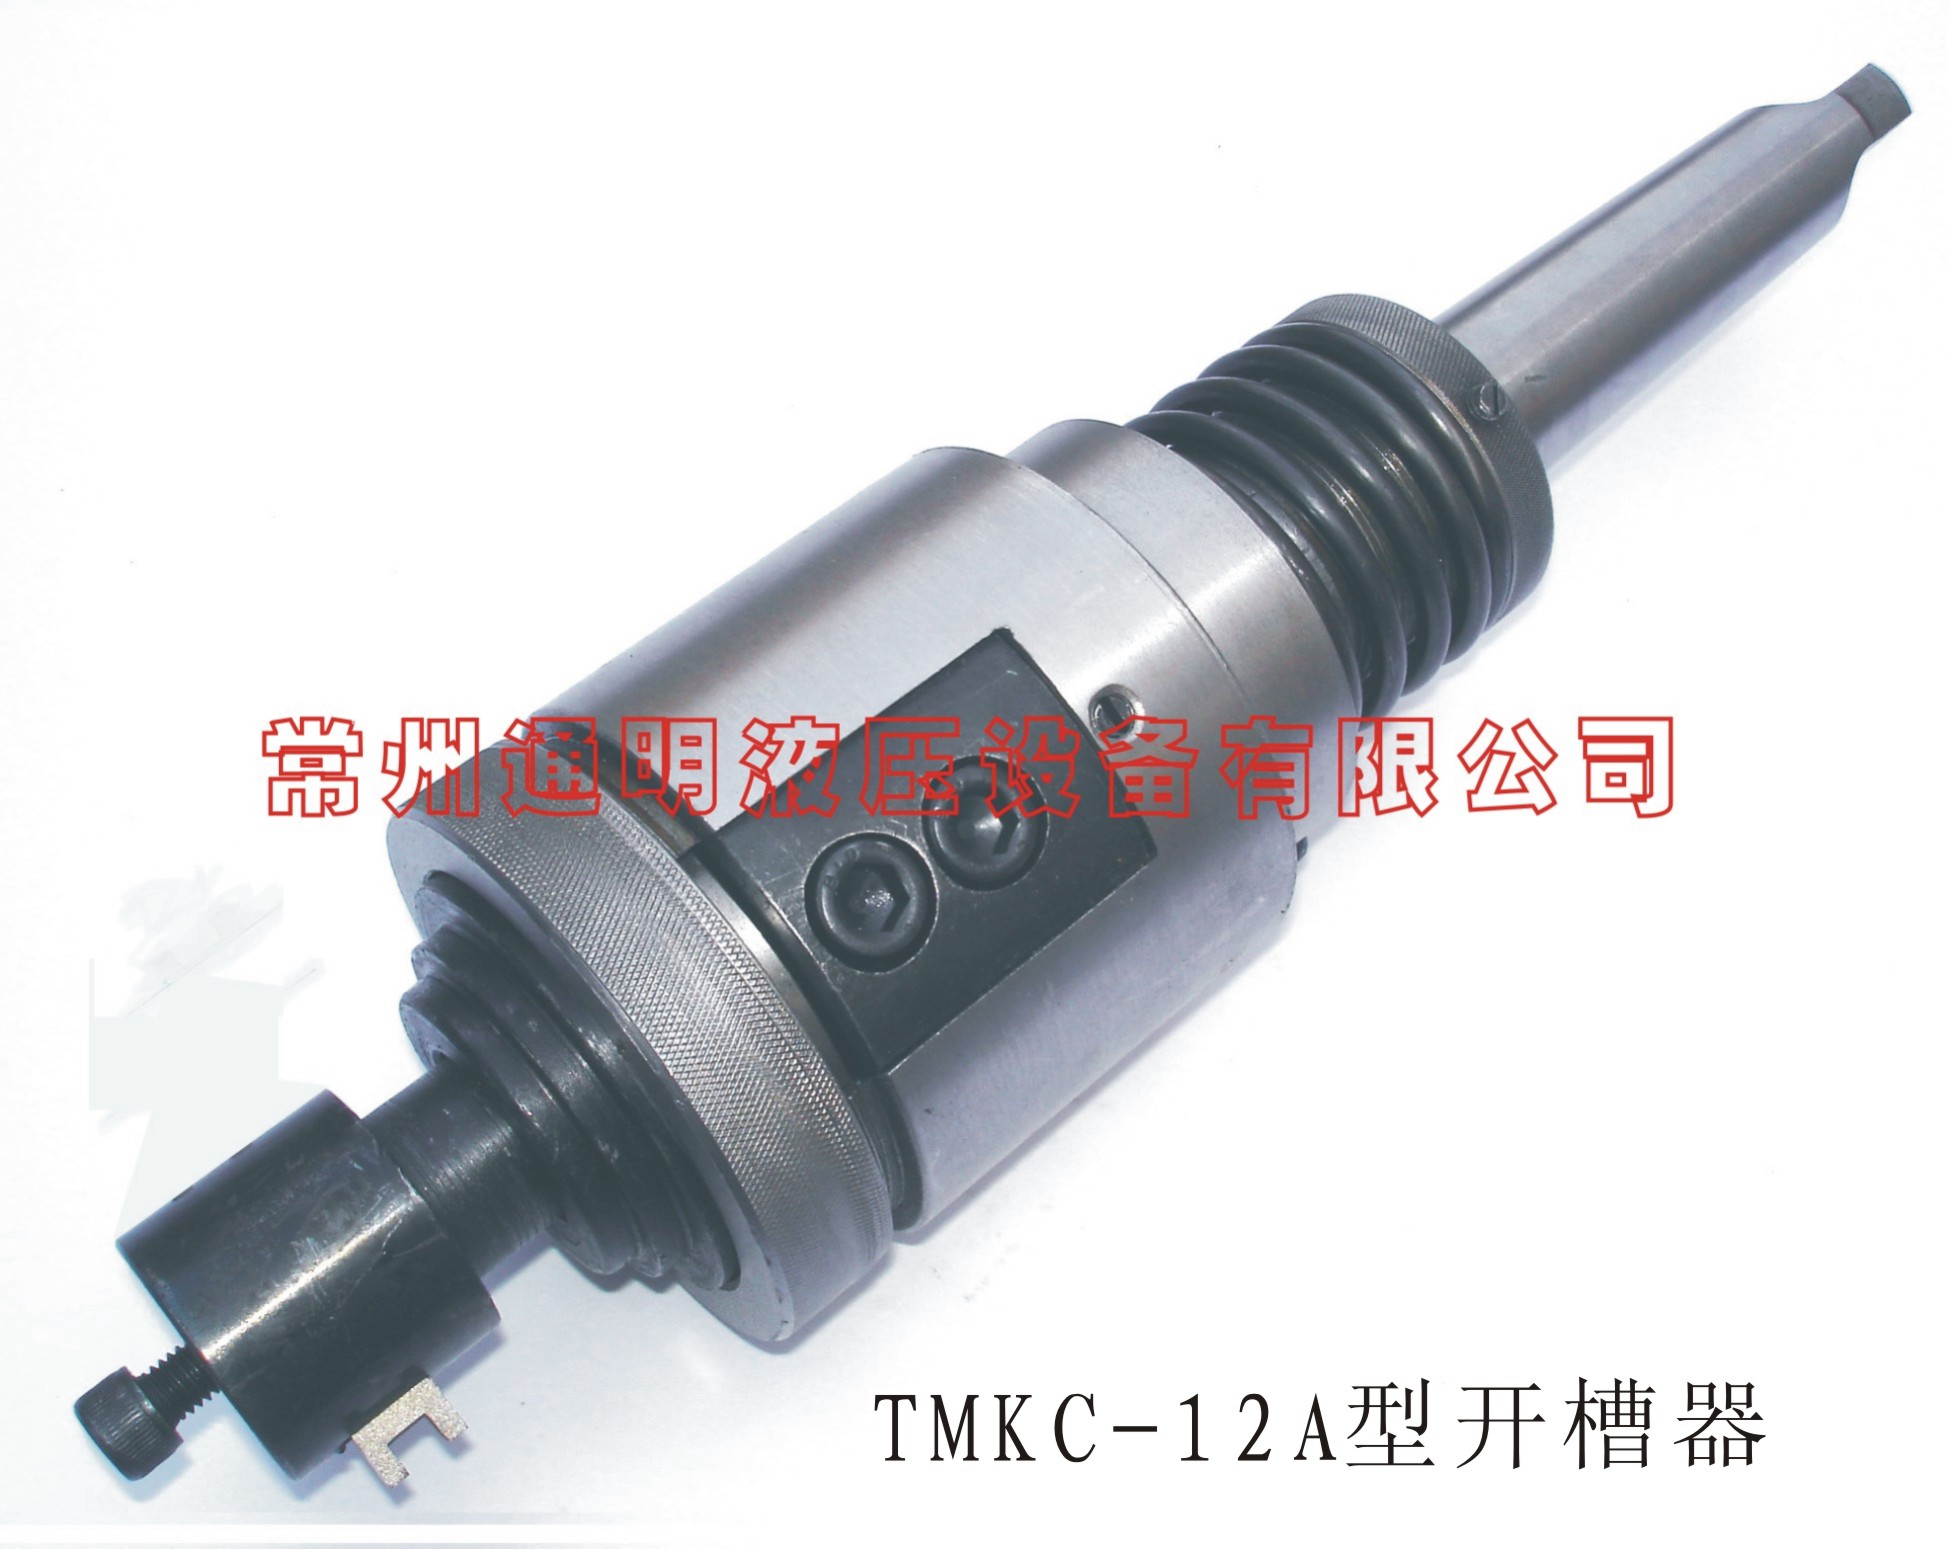 TMKC-12A型开槽器